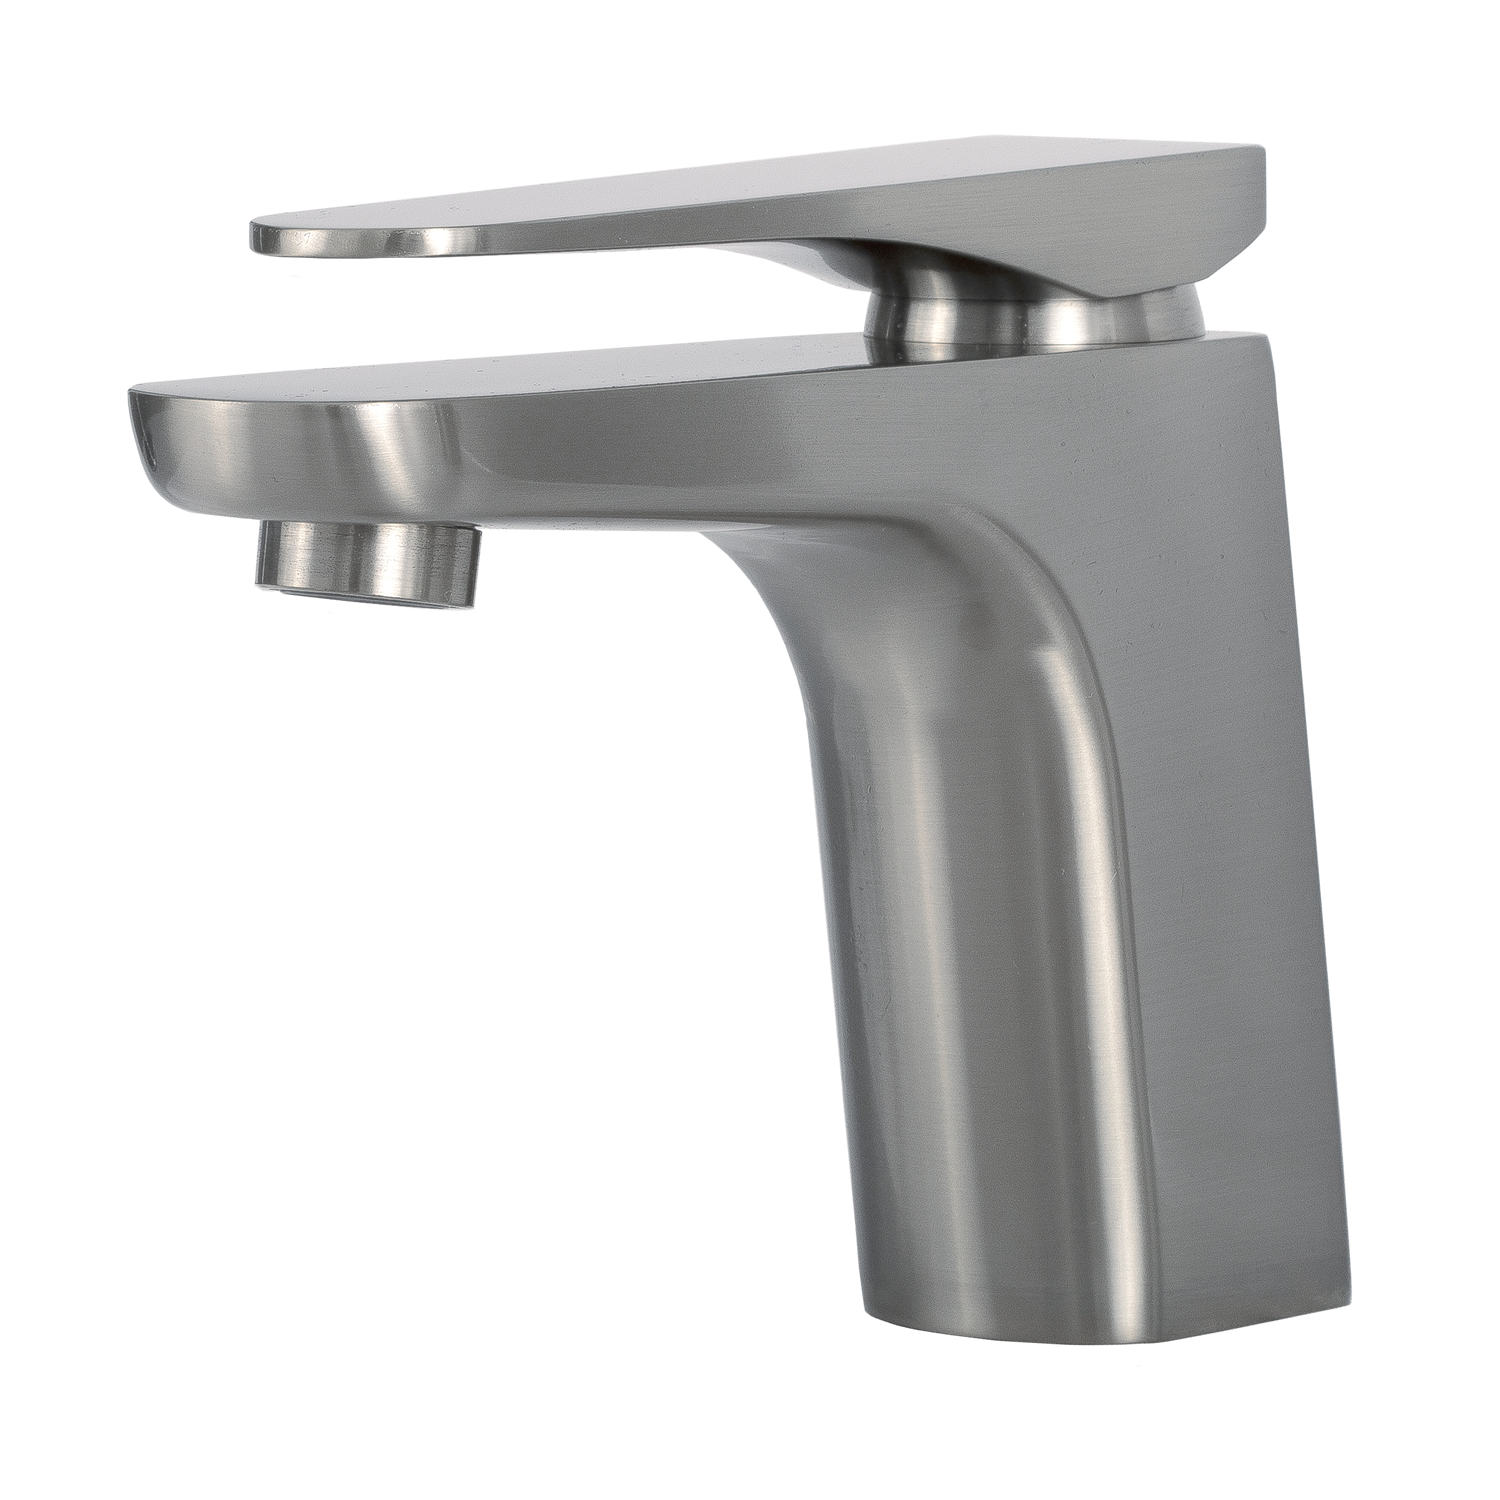 DAX Single Handle Bathroom Faucet, Brass Body, 6-7/8 x 5-5/16 Inches (DAX-805A)